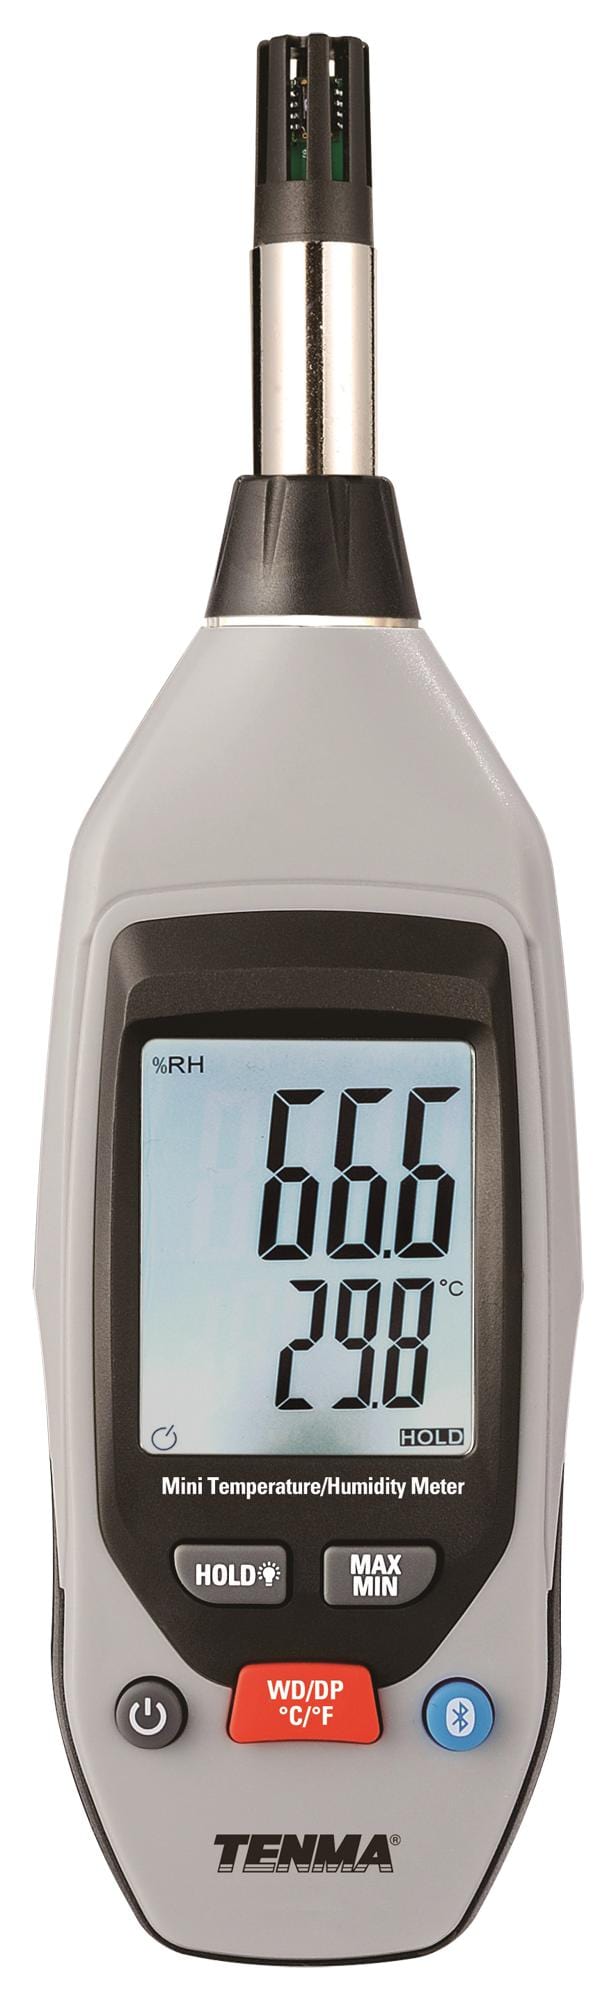 TENMA Humidity ST-91 MINI TEMP & HUMIDITY METER, 0% TO 100% TENMA 2851224 MP780863